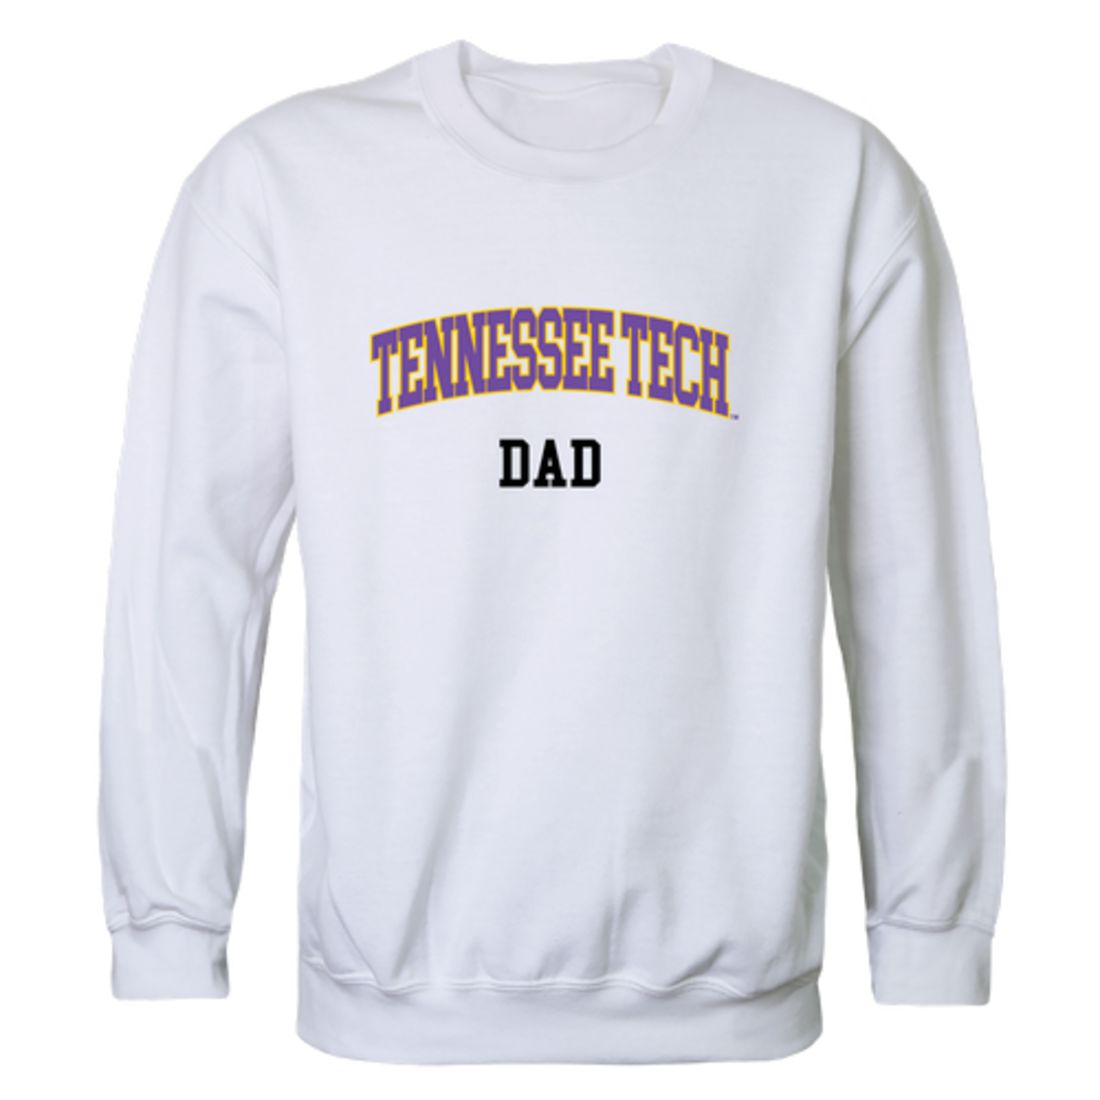 TTU Tennessee Tech University Golden Eagles Dad Fleece Crewneck Pullover Sweatshirt Heather Charcoal-Campus-Wardrobe